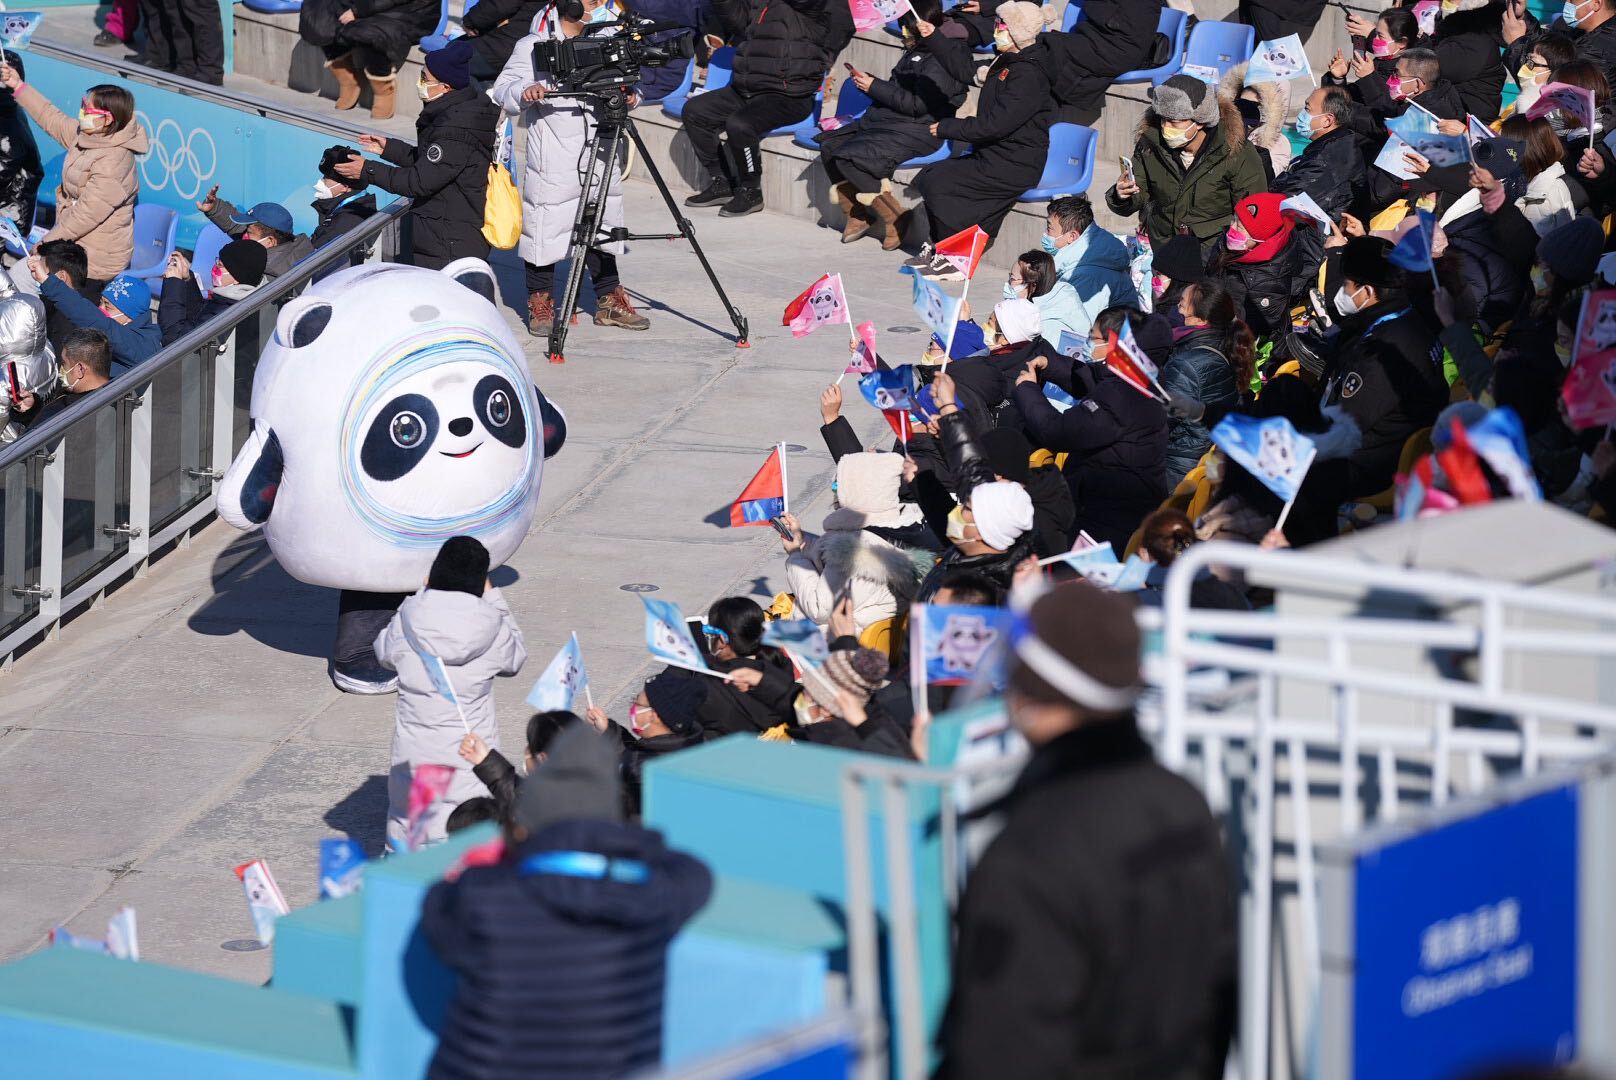 Beijing 2022 mascot Bing Dwen Dwen entertains the crowds on Tuesday at the women's big air event.